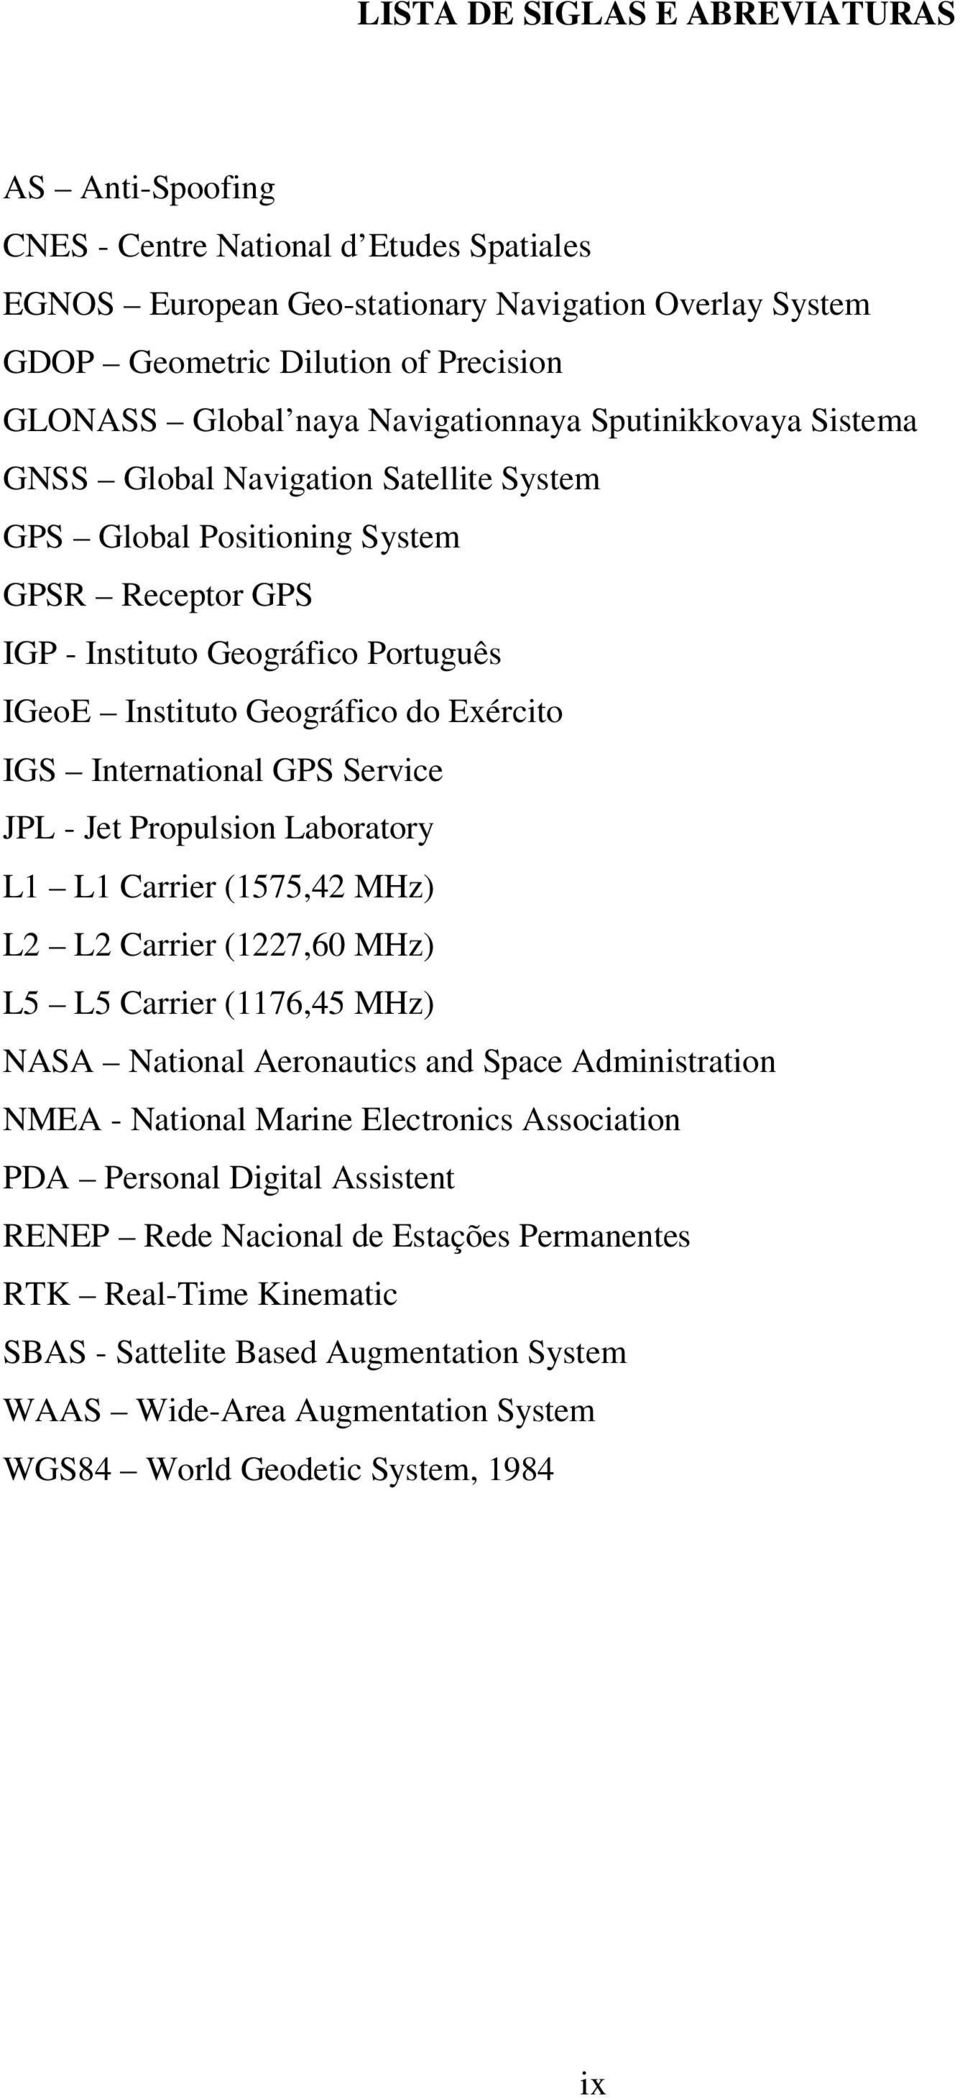 Exército IGS International GPS Service JPL - Jet Propulsion Laboratory L1 L1 Carrier (1575,42 MHz) L2 L2 Carrier (1227,60 MHz) L5 L5 Carrier (1176,45 MHz) NASA National Aeronautics and Space